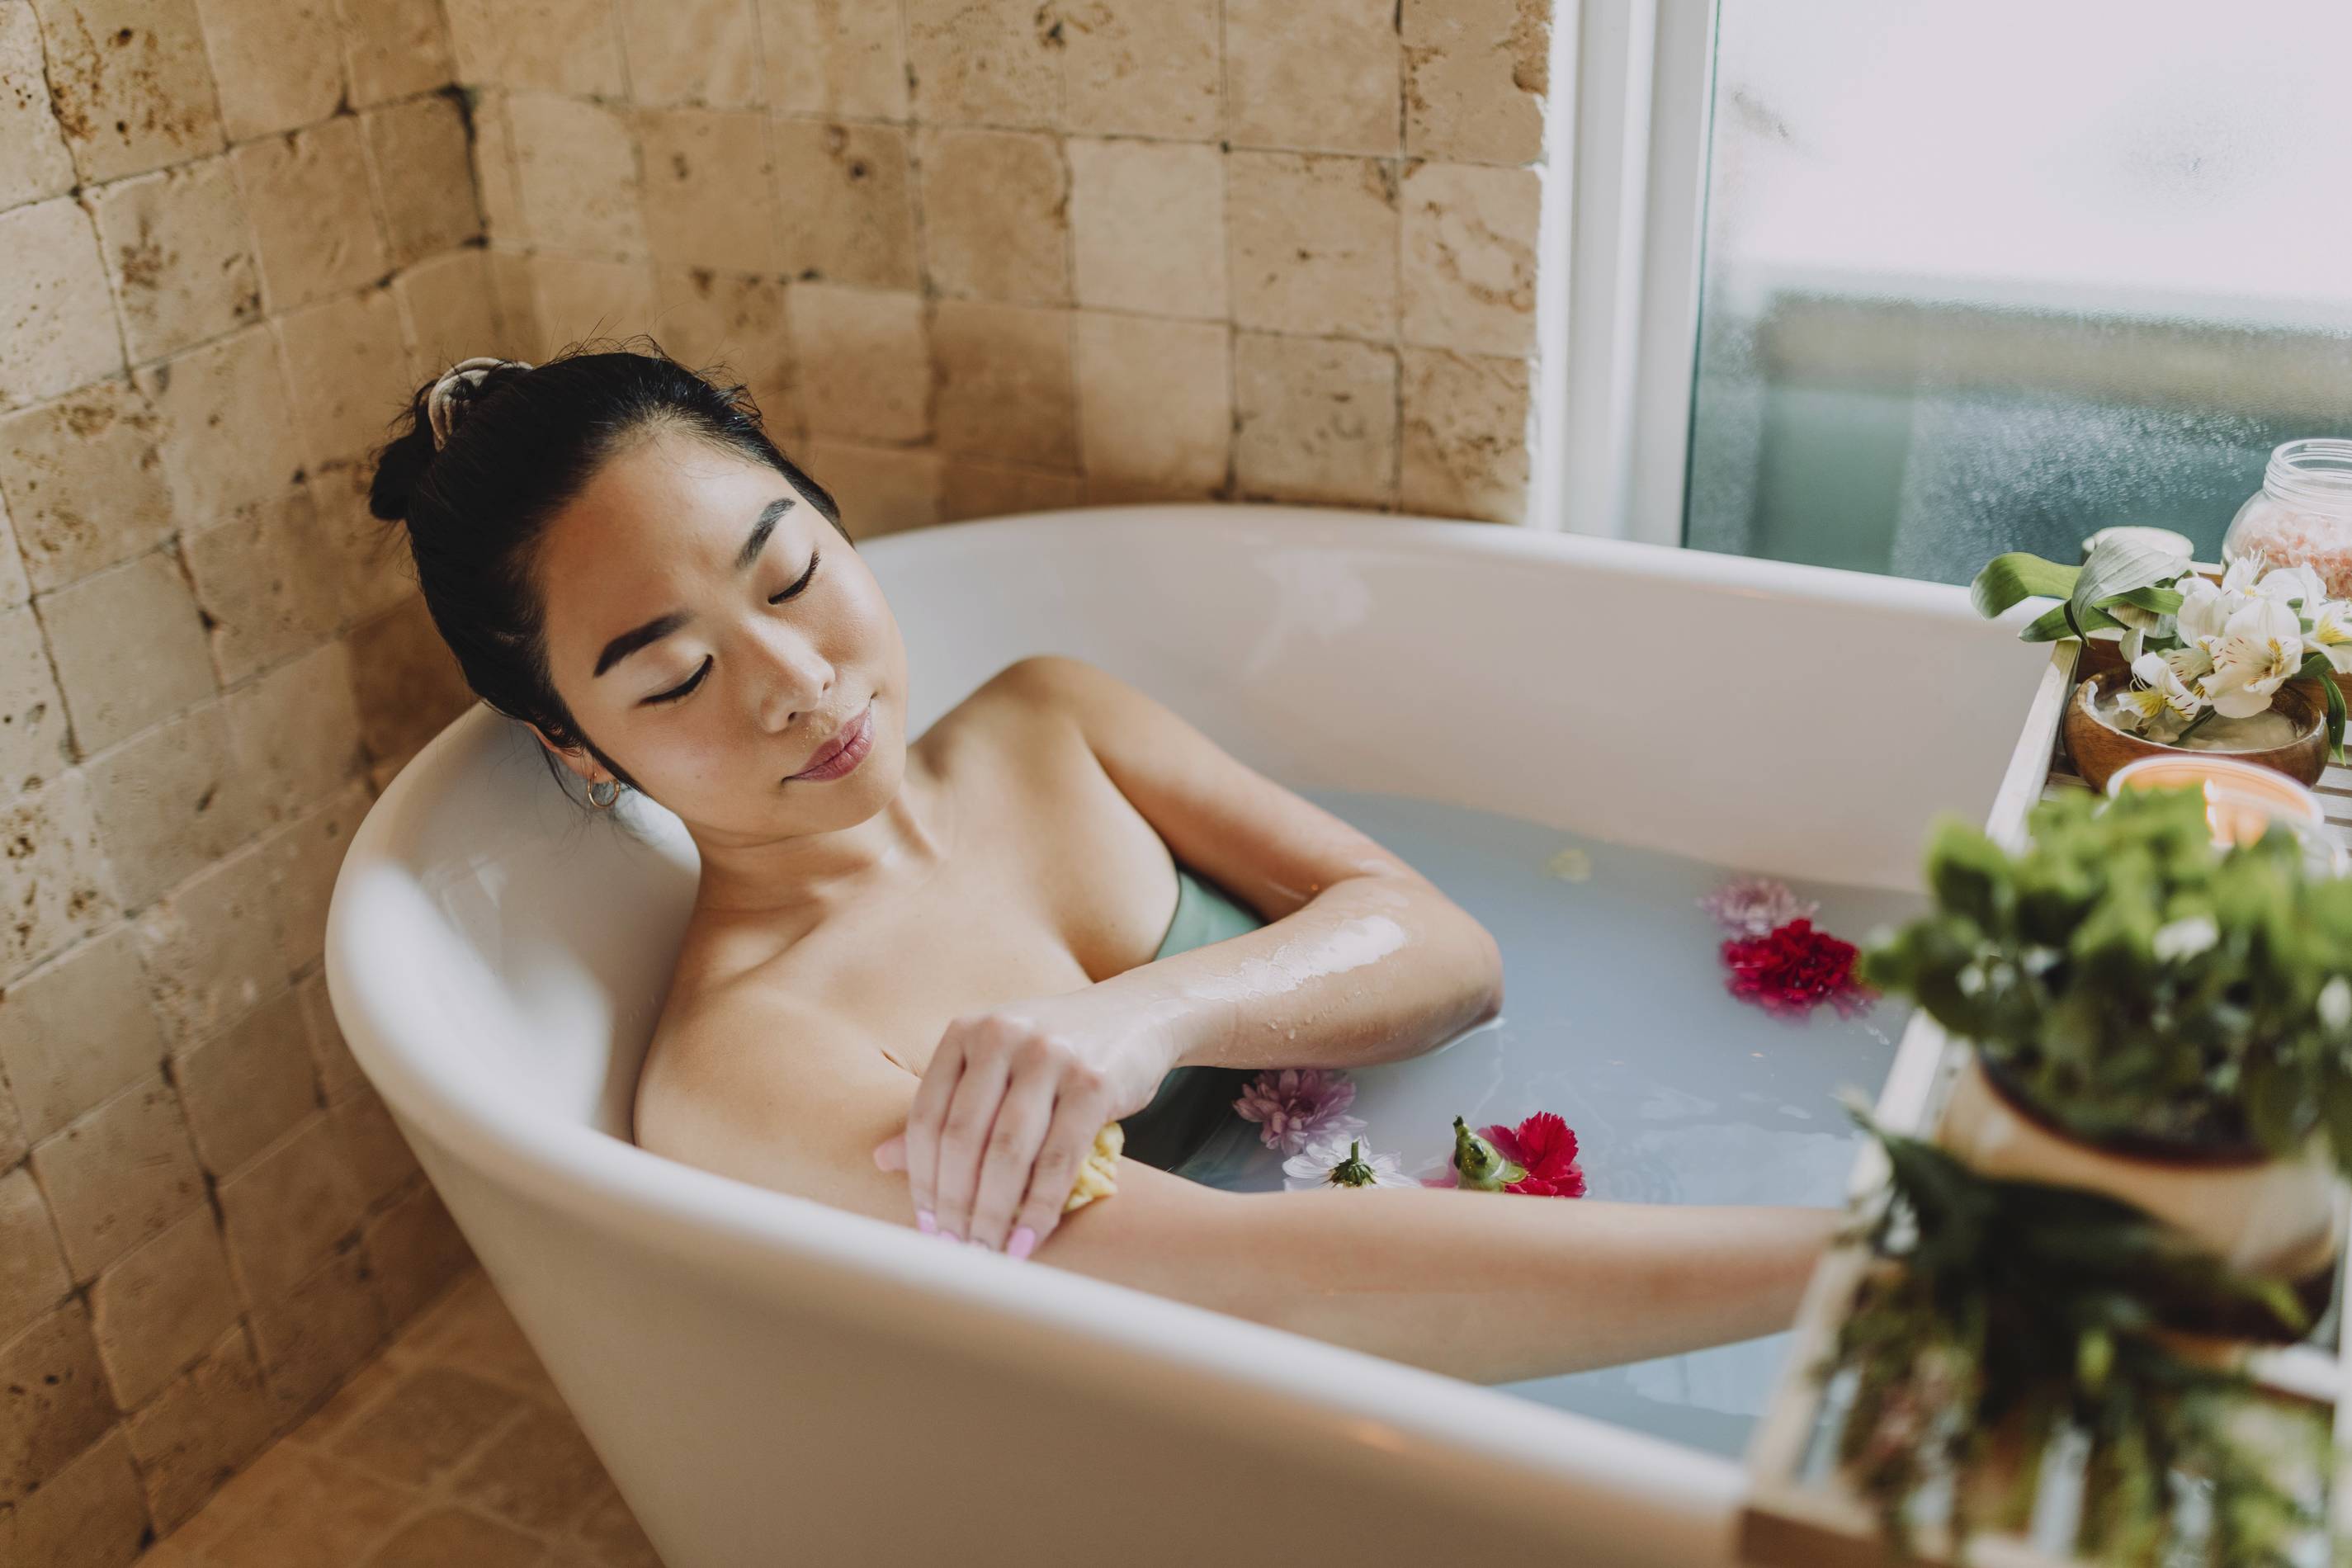 a woman enjoys a luxurious bath